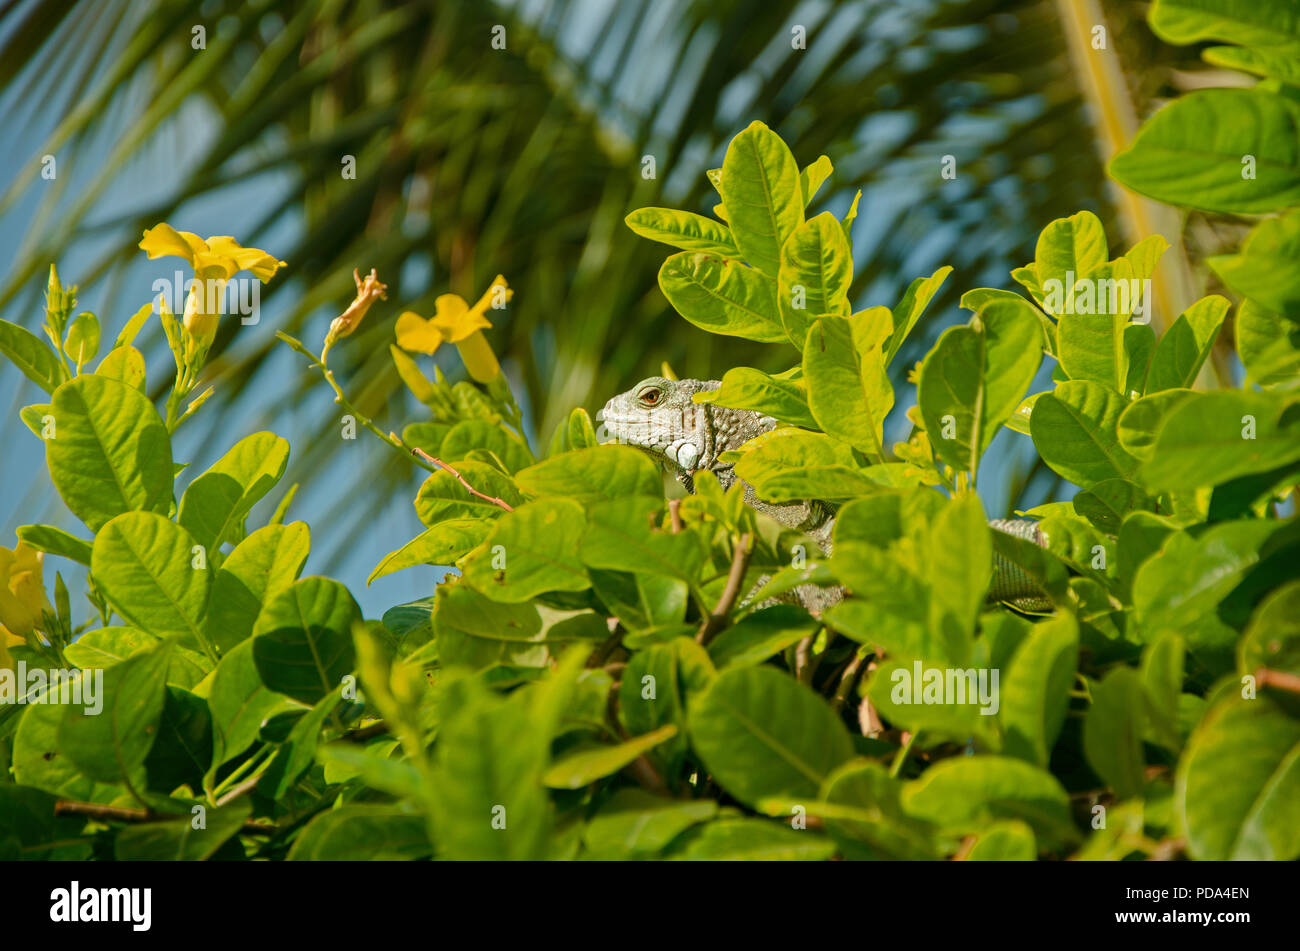 Aruba Green Iguana hiding in bushes with yellow flowers Stock Photo